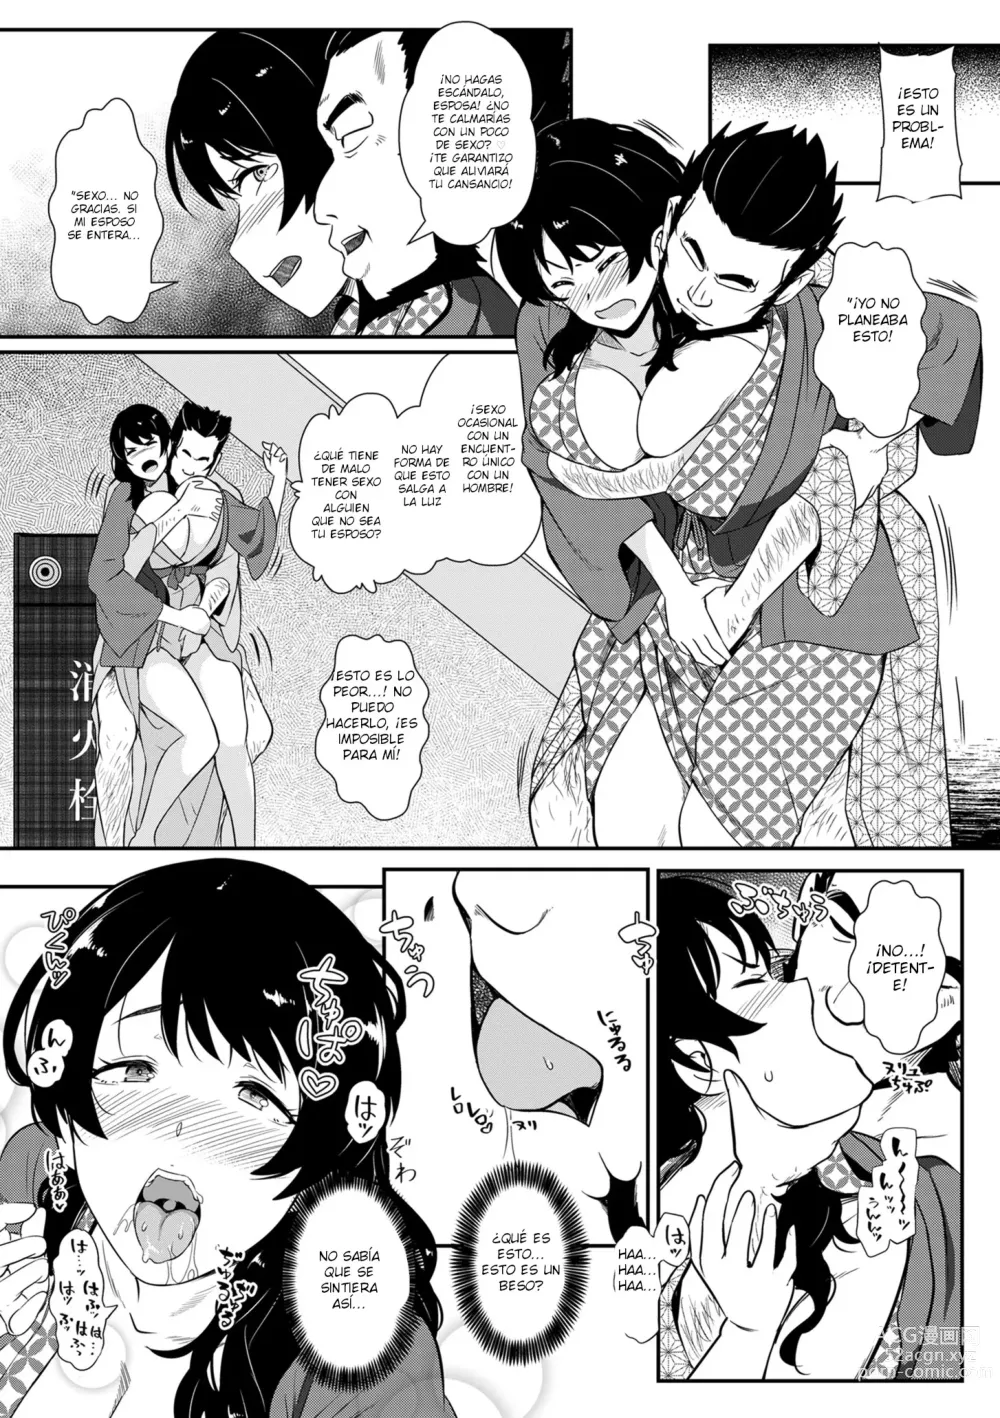 Page 7 of manga Haha wa tabi no owari ni...